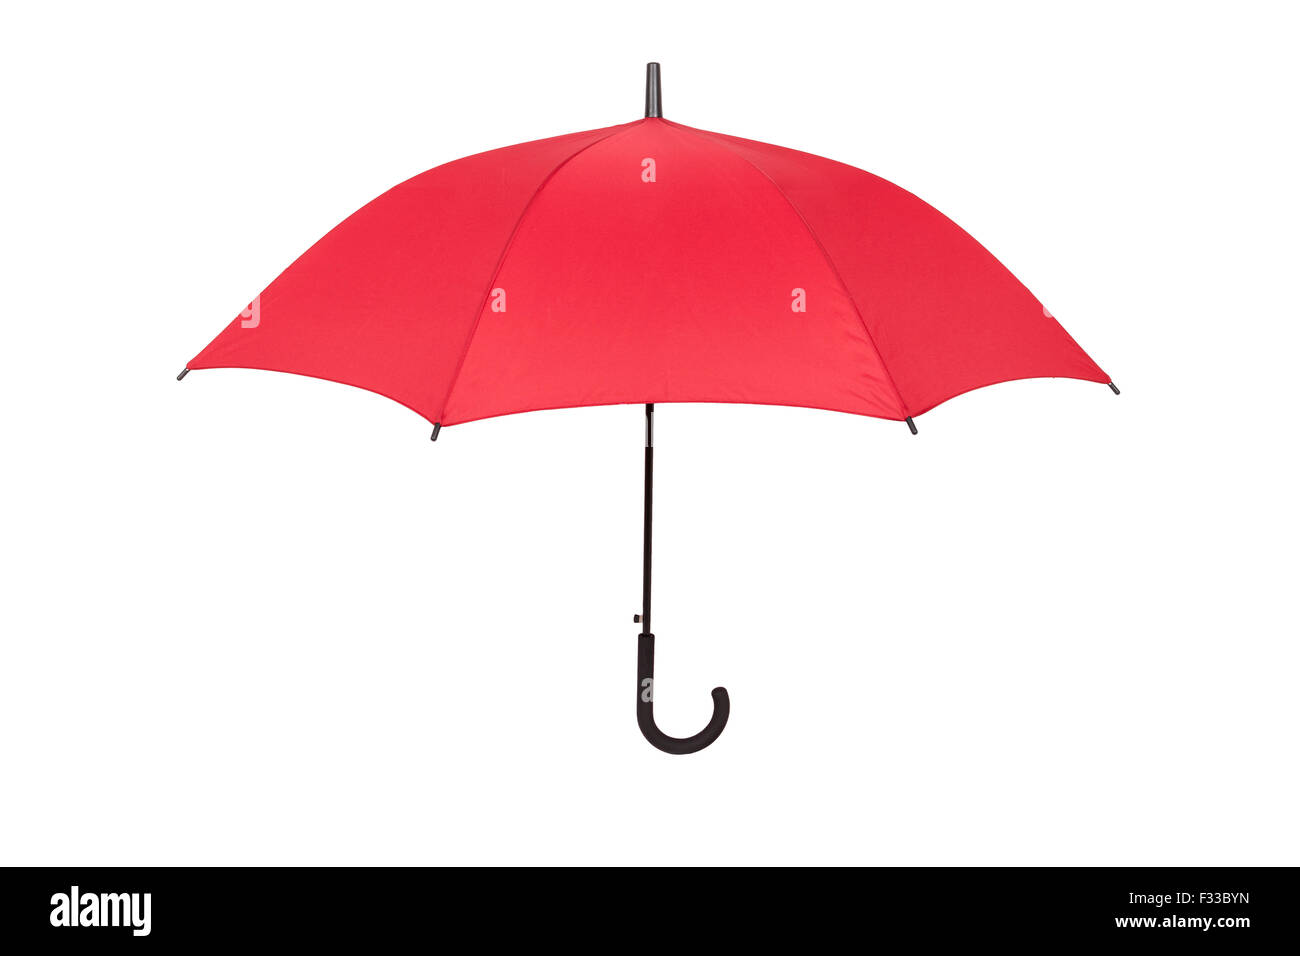 Red umbrella isolated Stock Photo